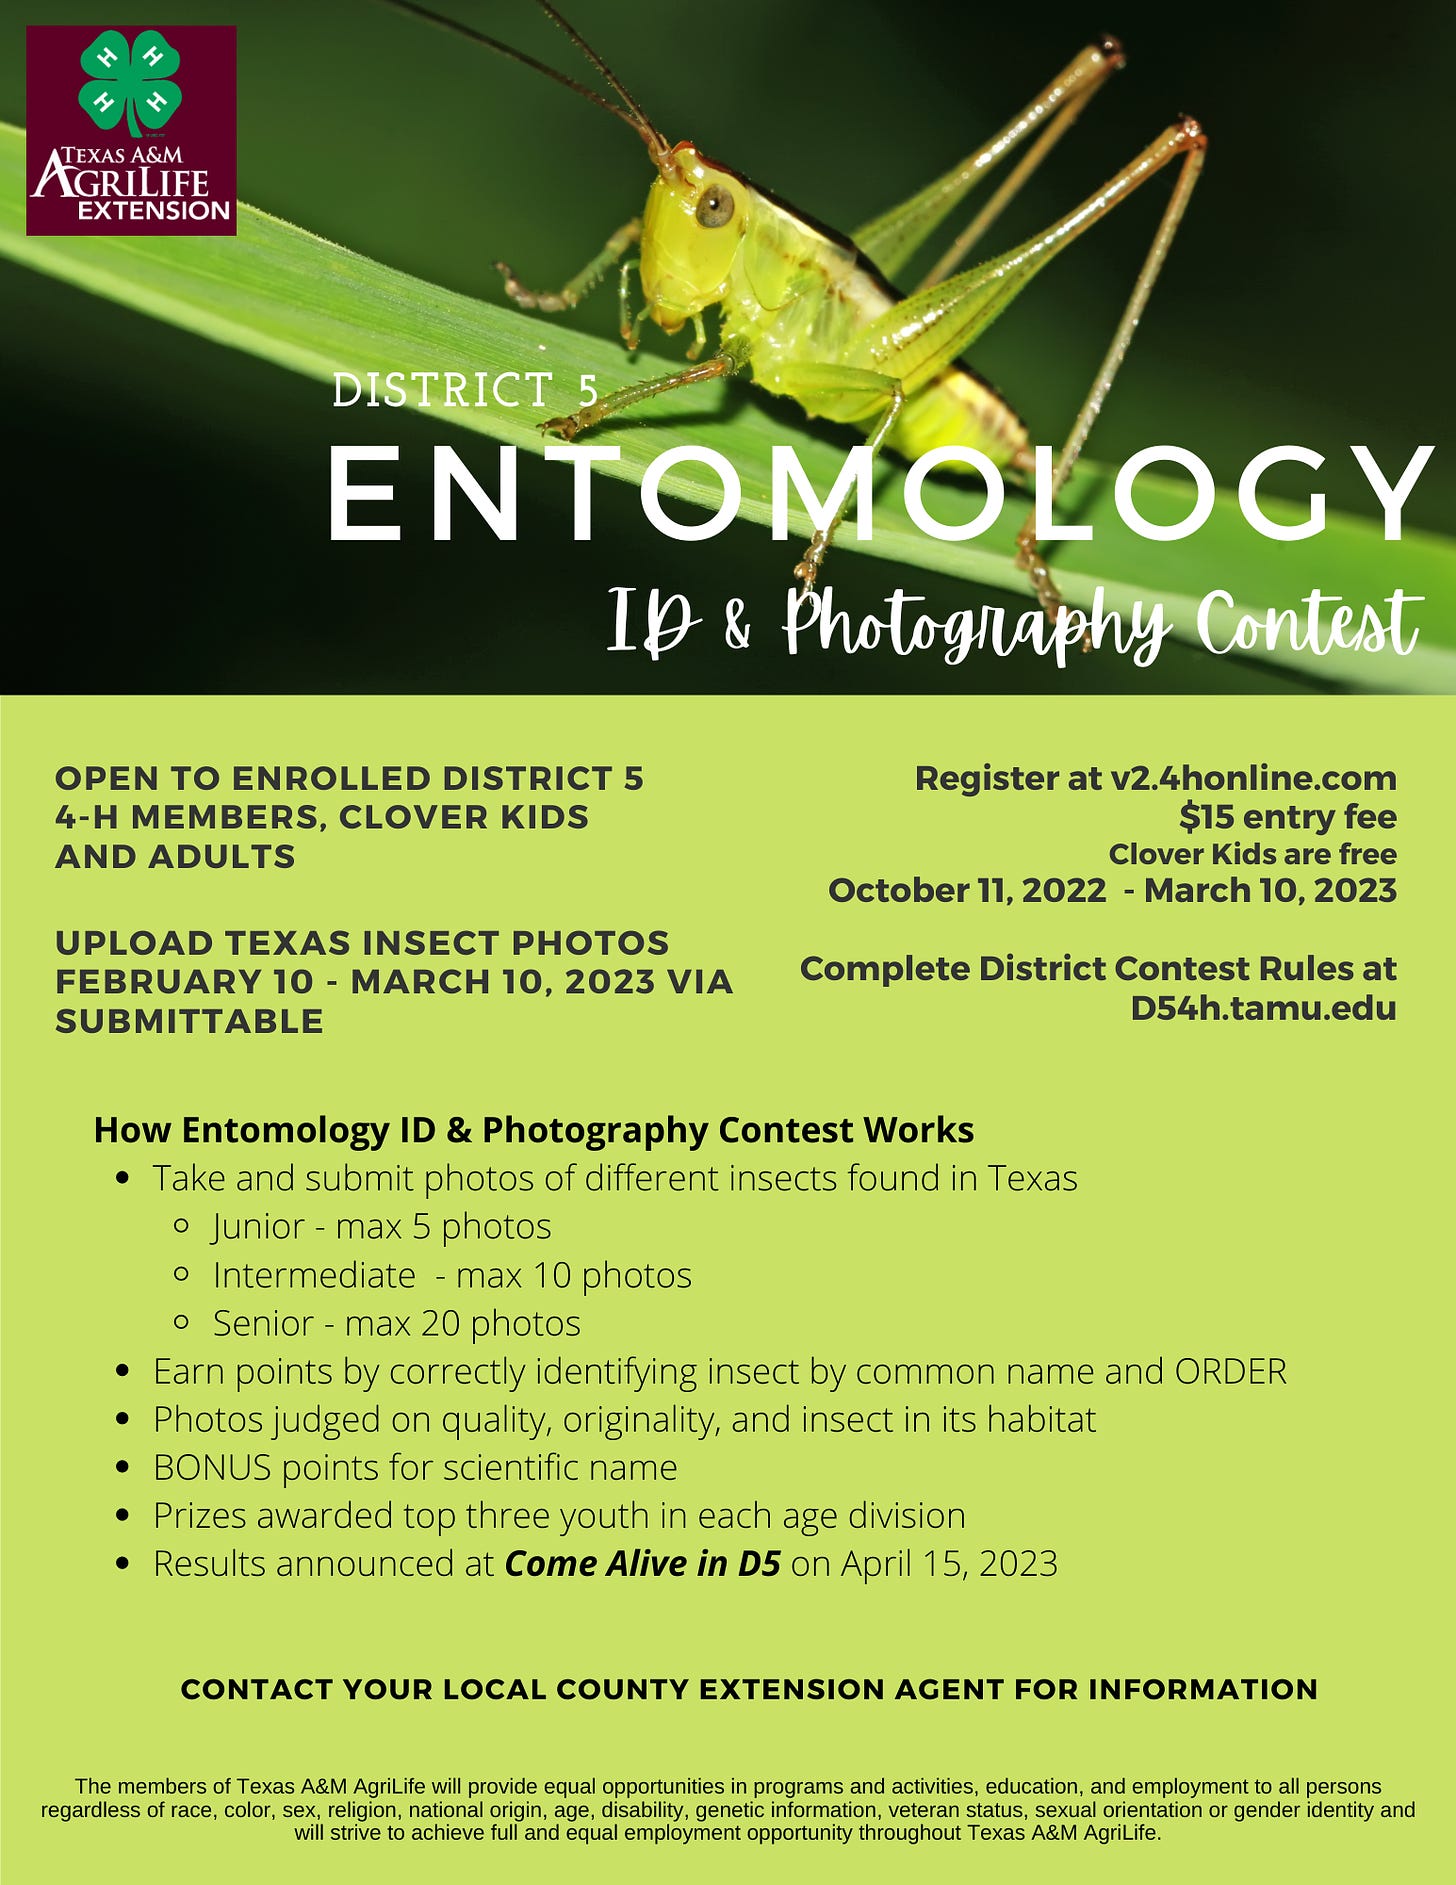 https://d54-h.tamu.edu/files/2022/10/2023-Entomology-Photography.png